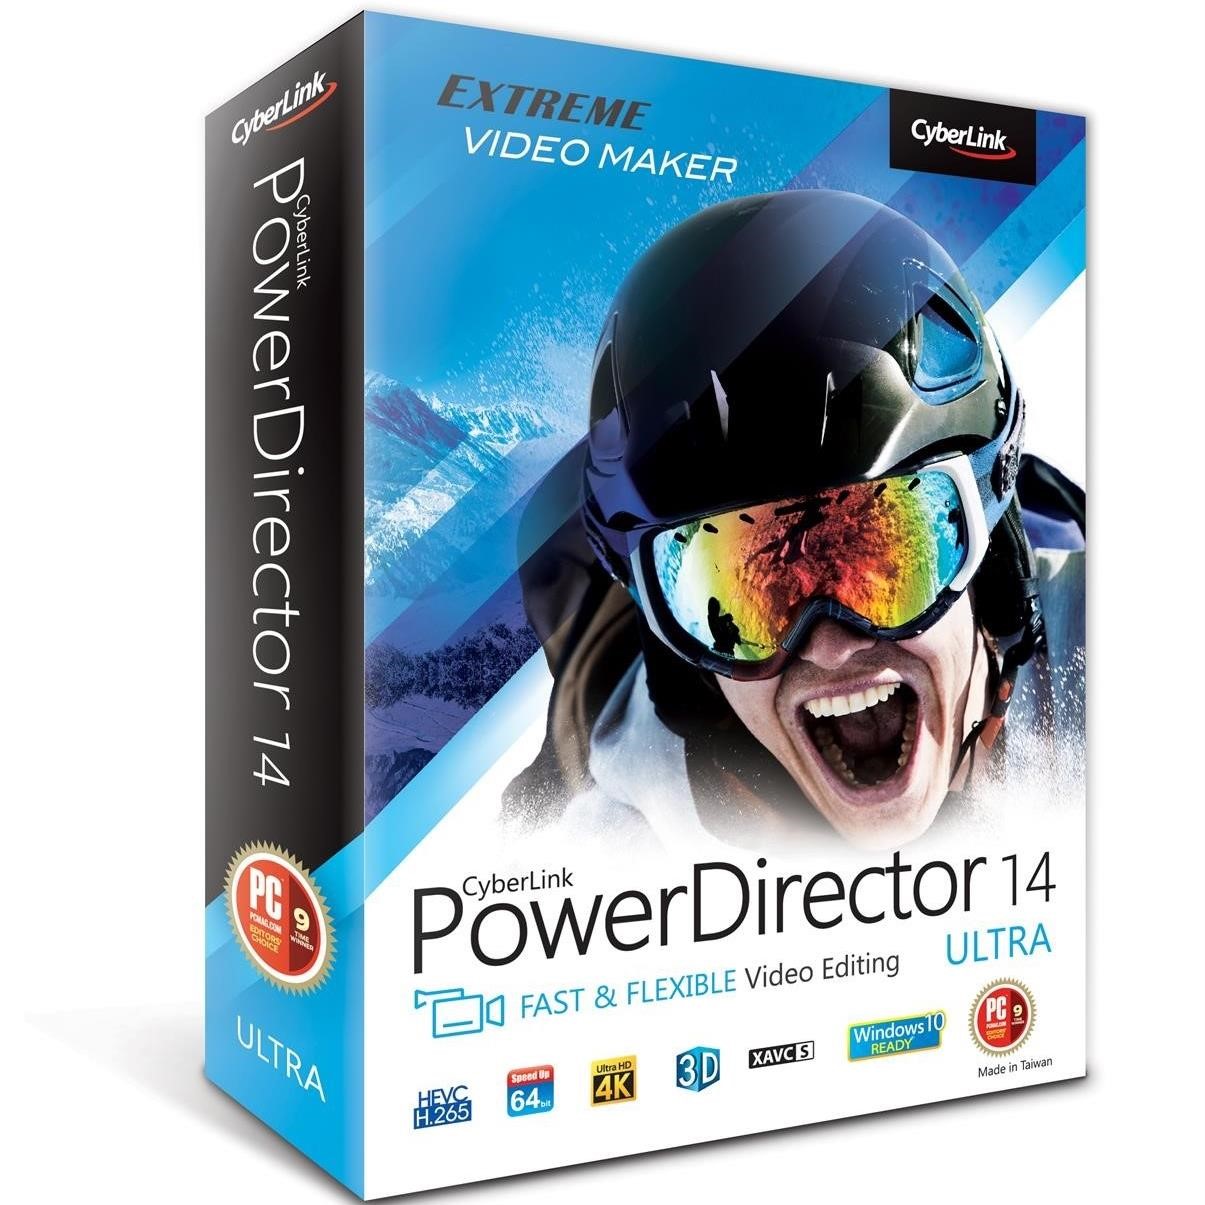 powerdirector 13 free download full version